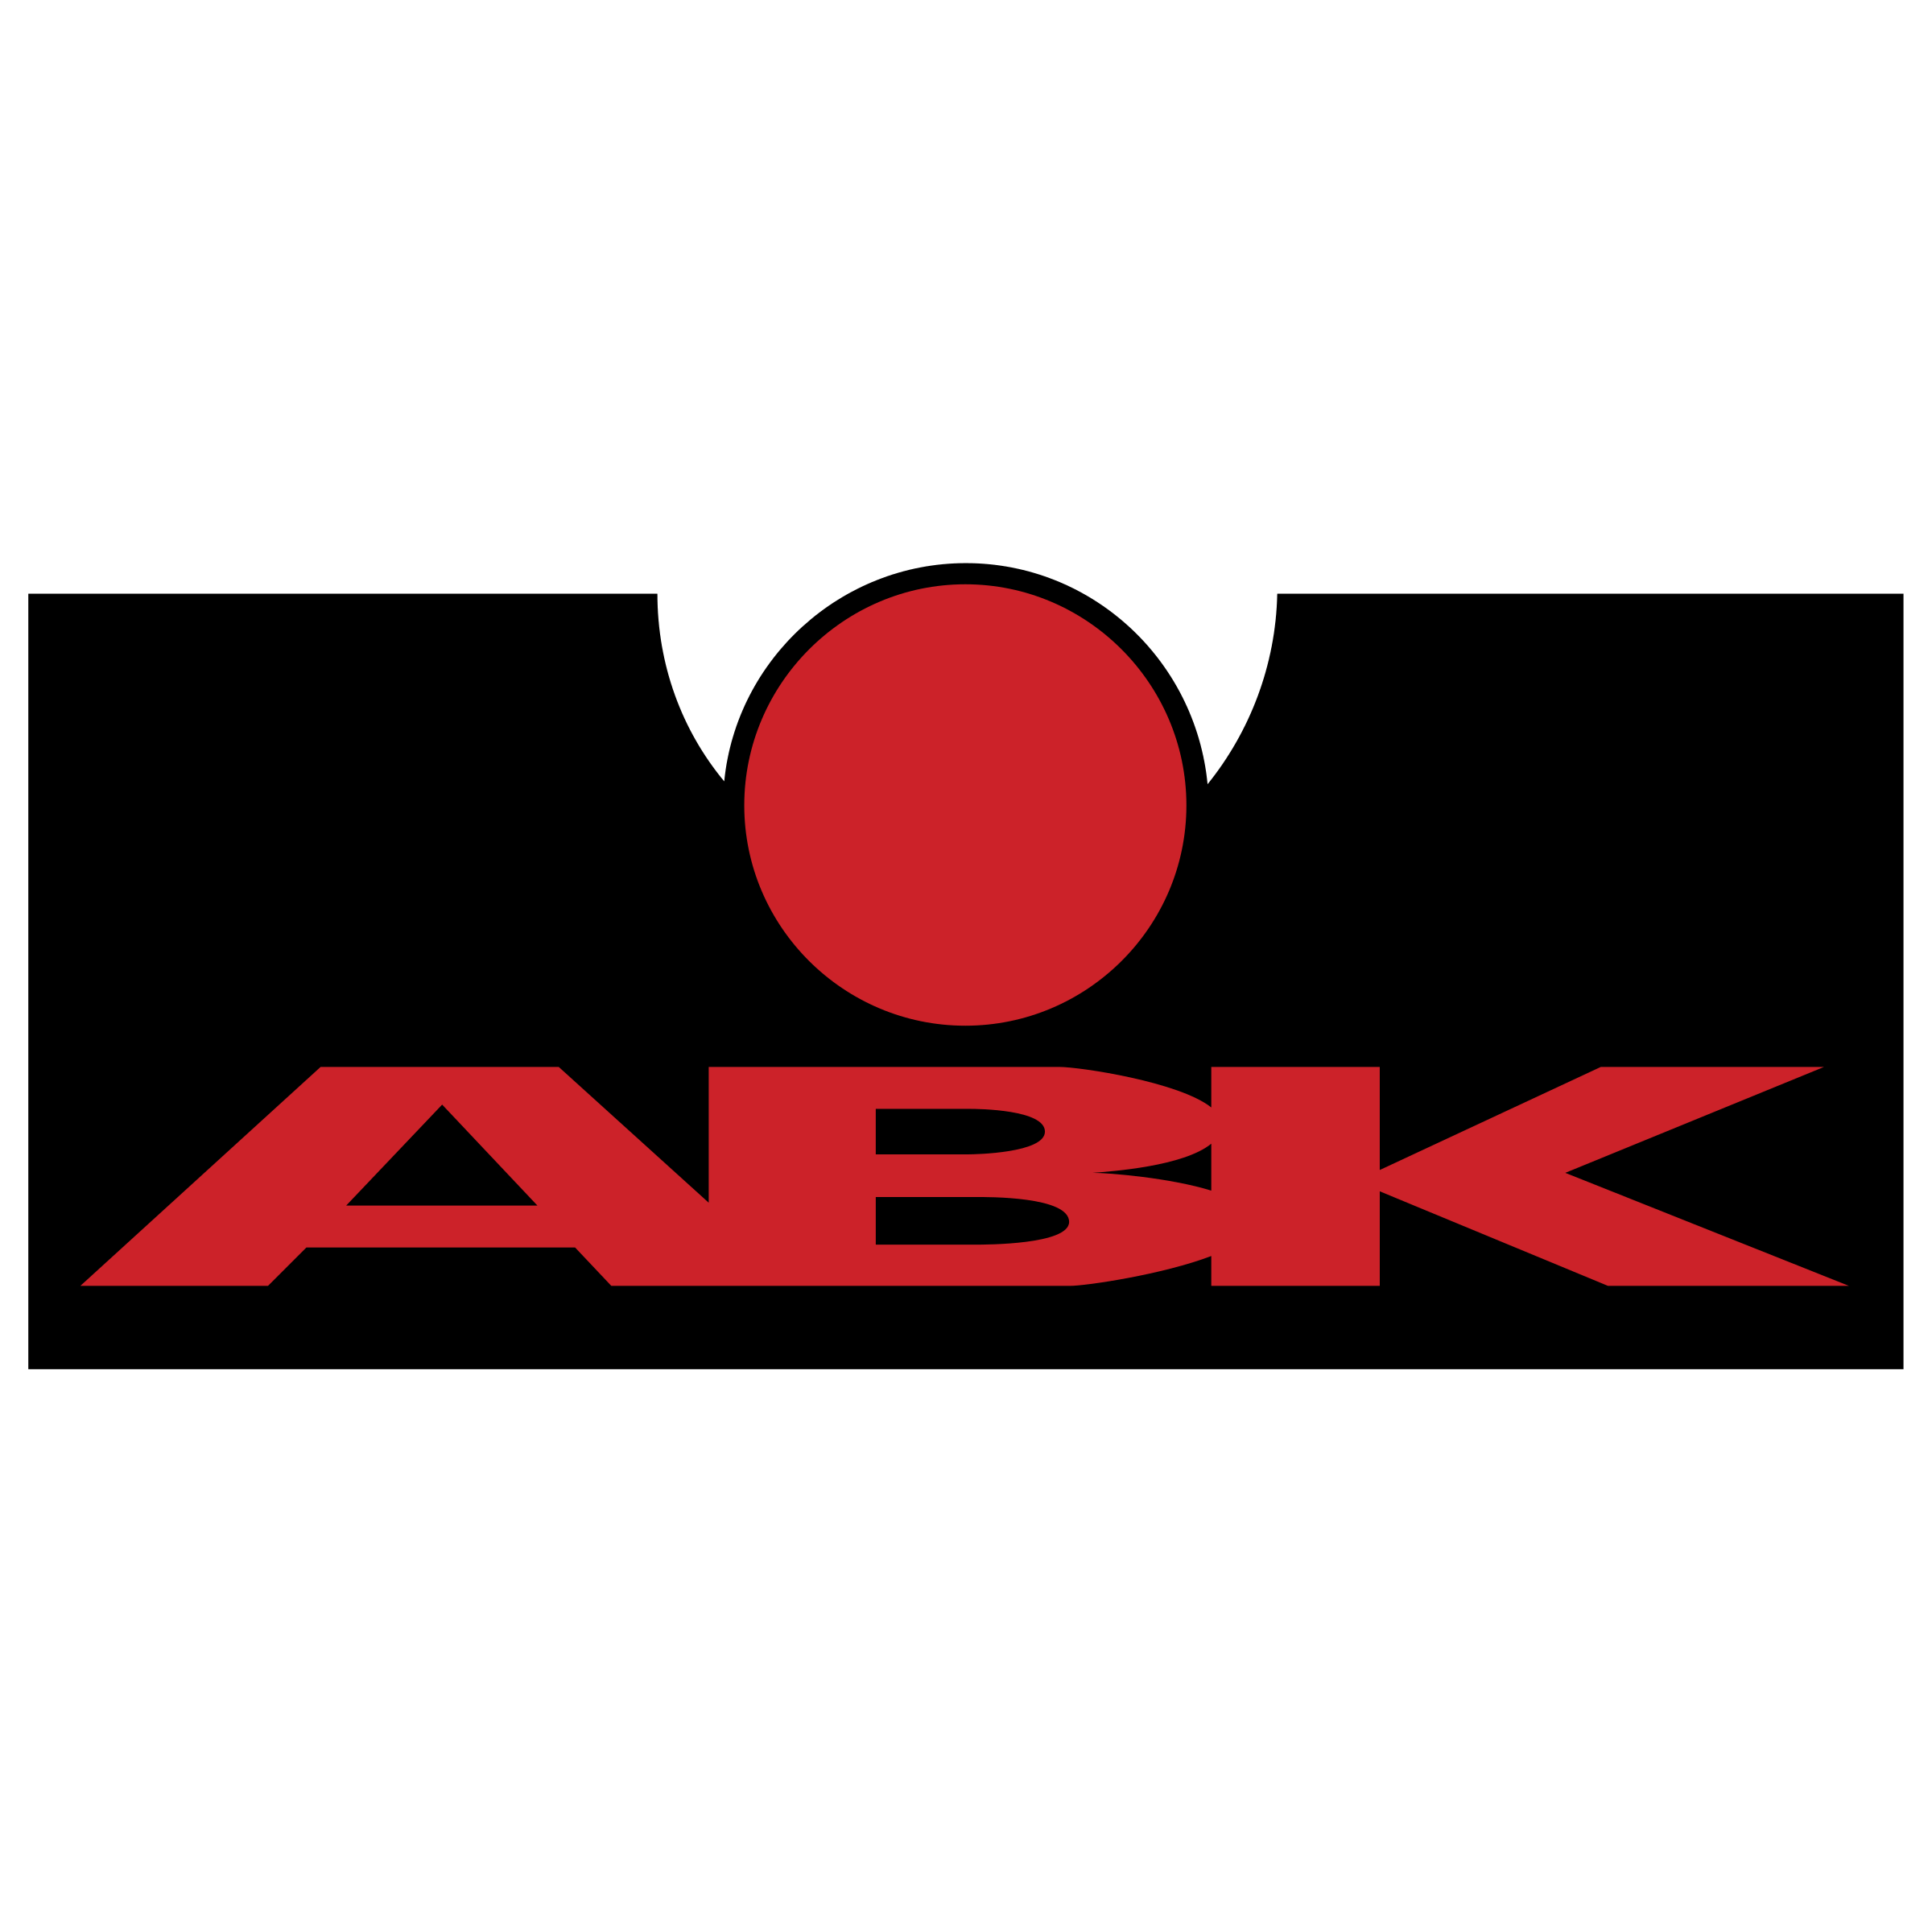 ABK Logo - ABK Logo PNG Transparent & SVG Vector - Freebie Supply